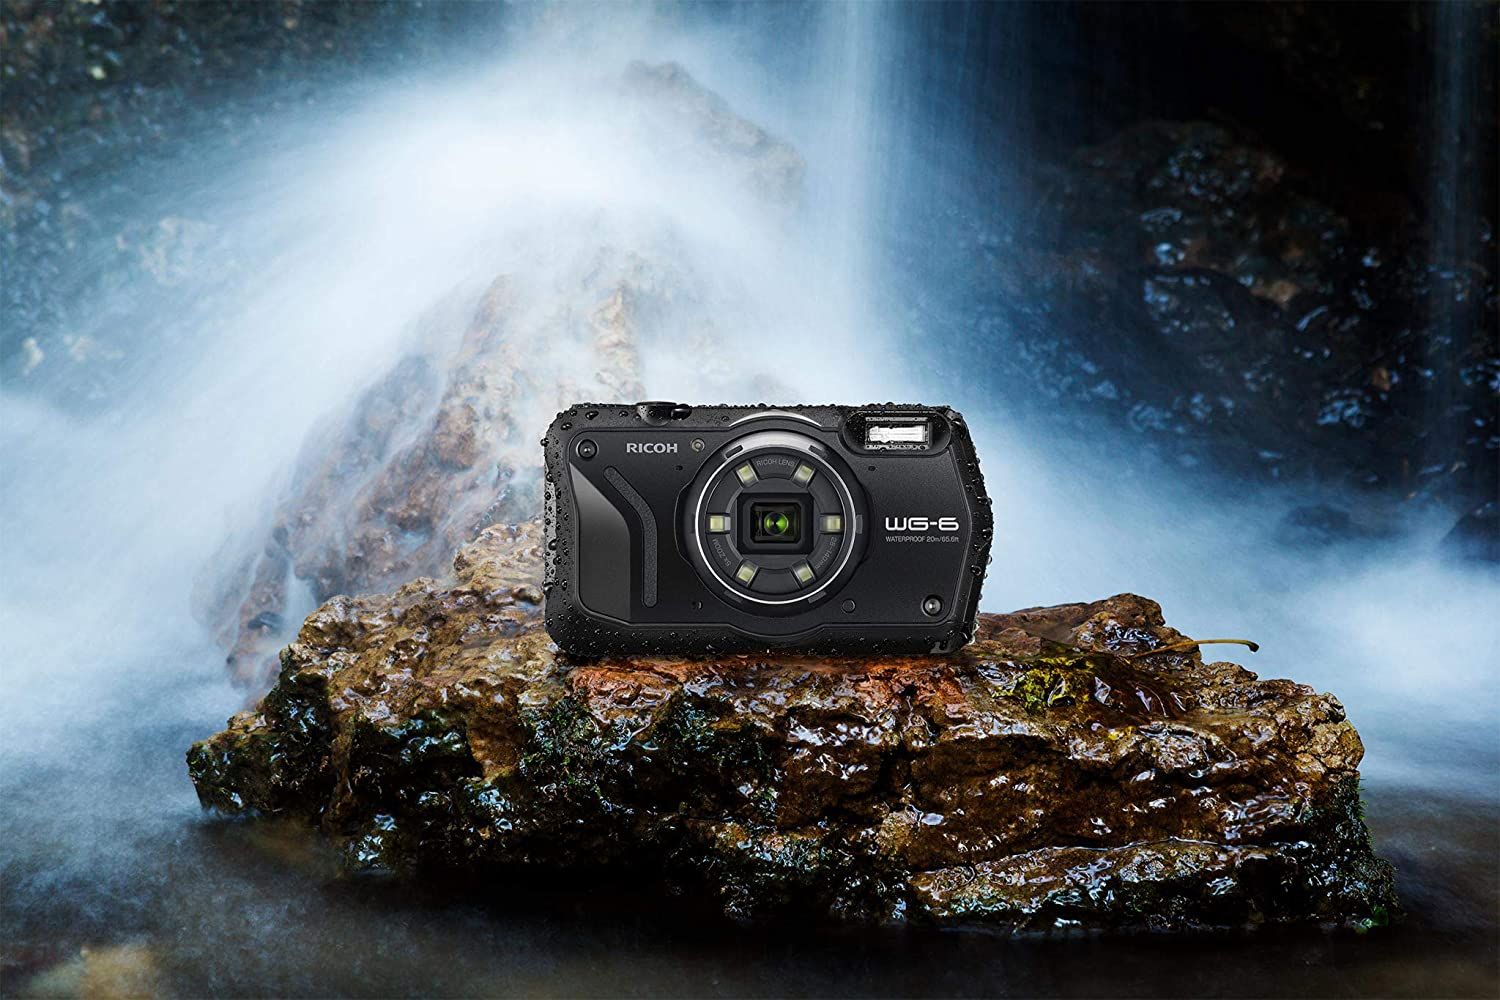 Ricoh WG-6 Digital Waterproof Compact Camera - Black